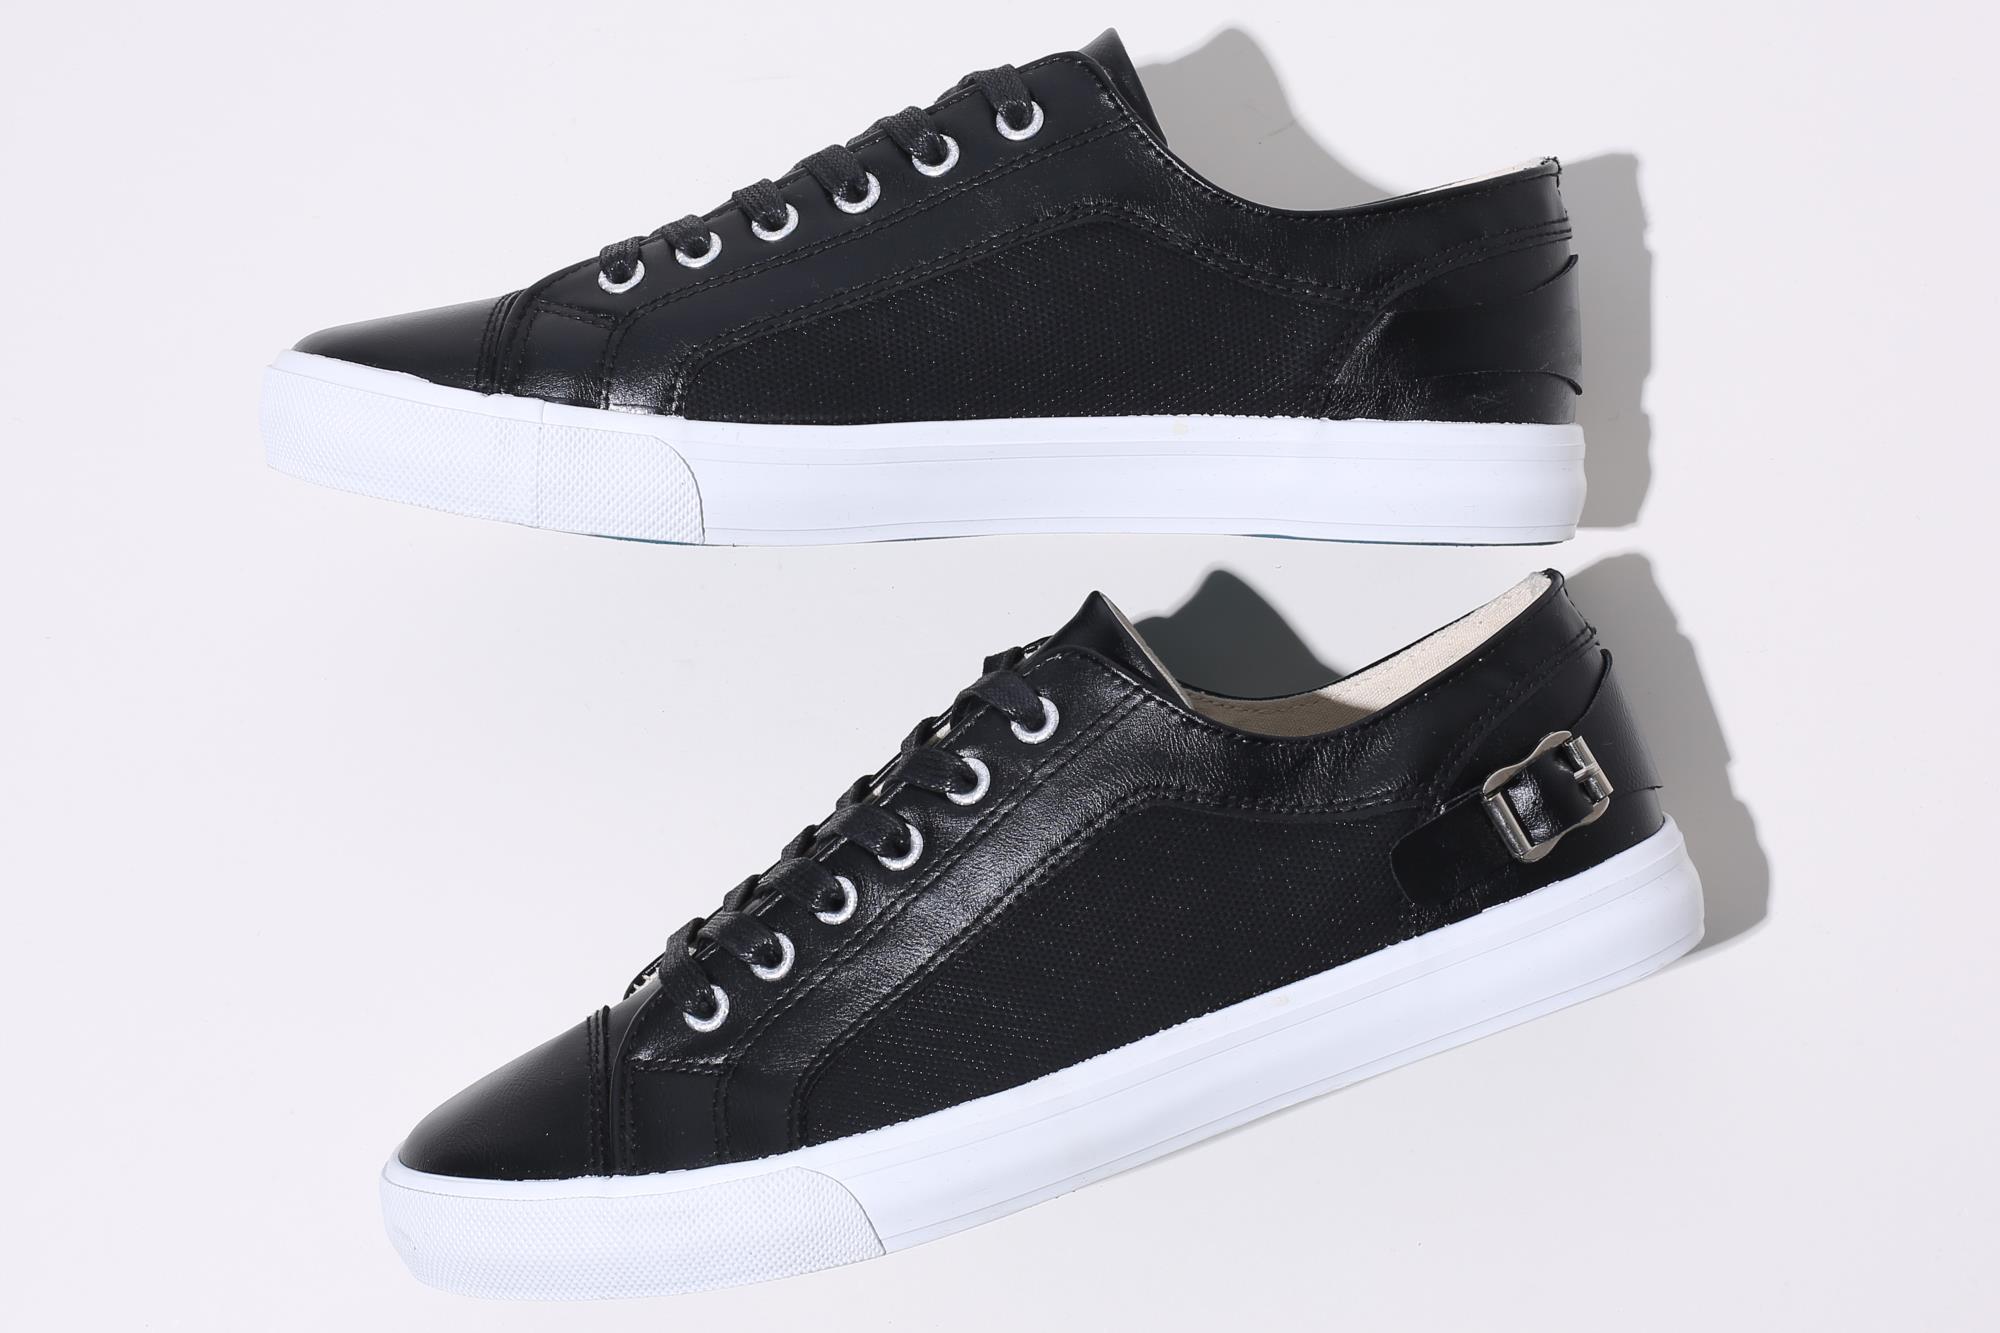 New arrival latest design fashion comfy black leather shoes men